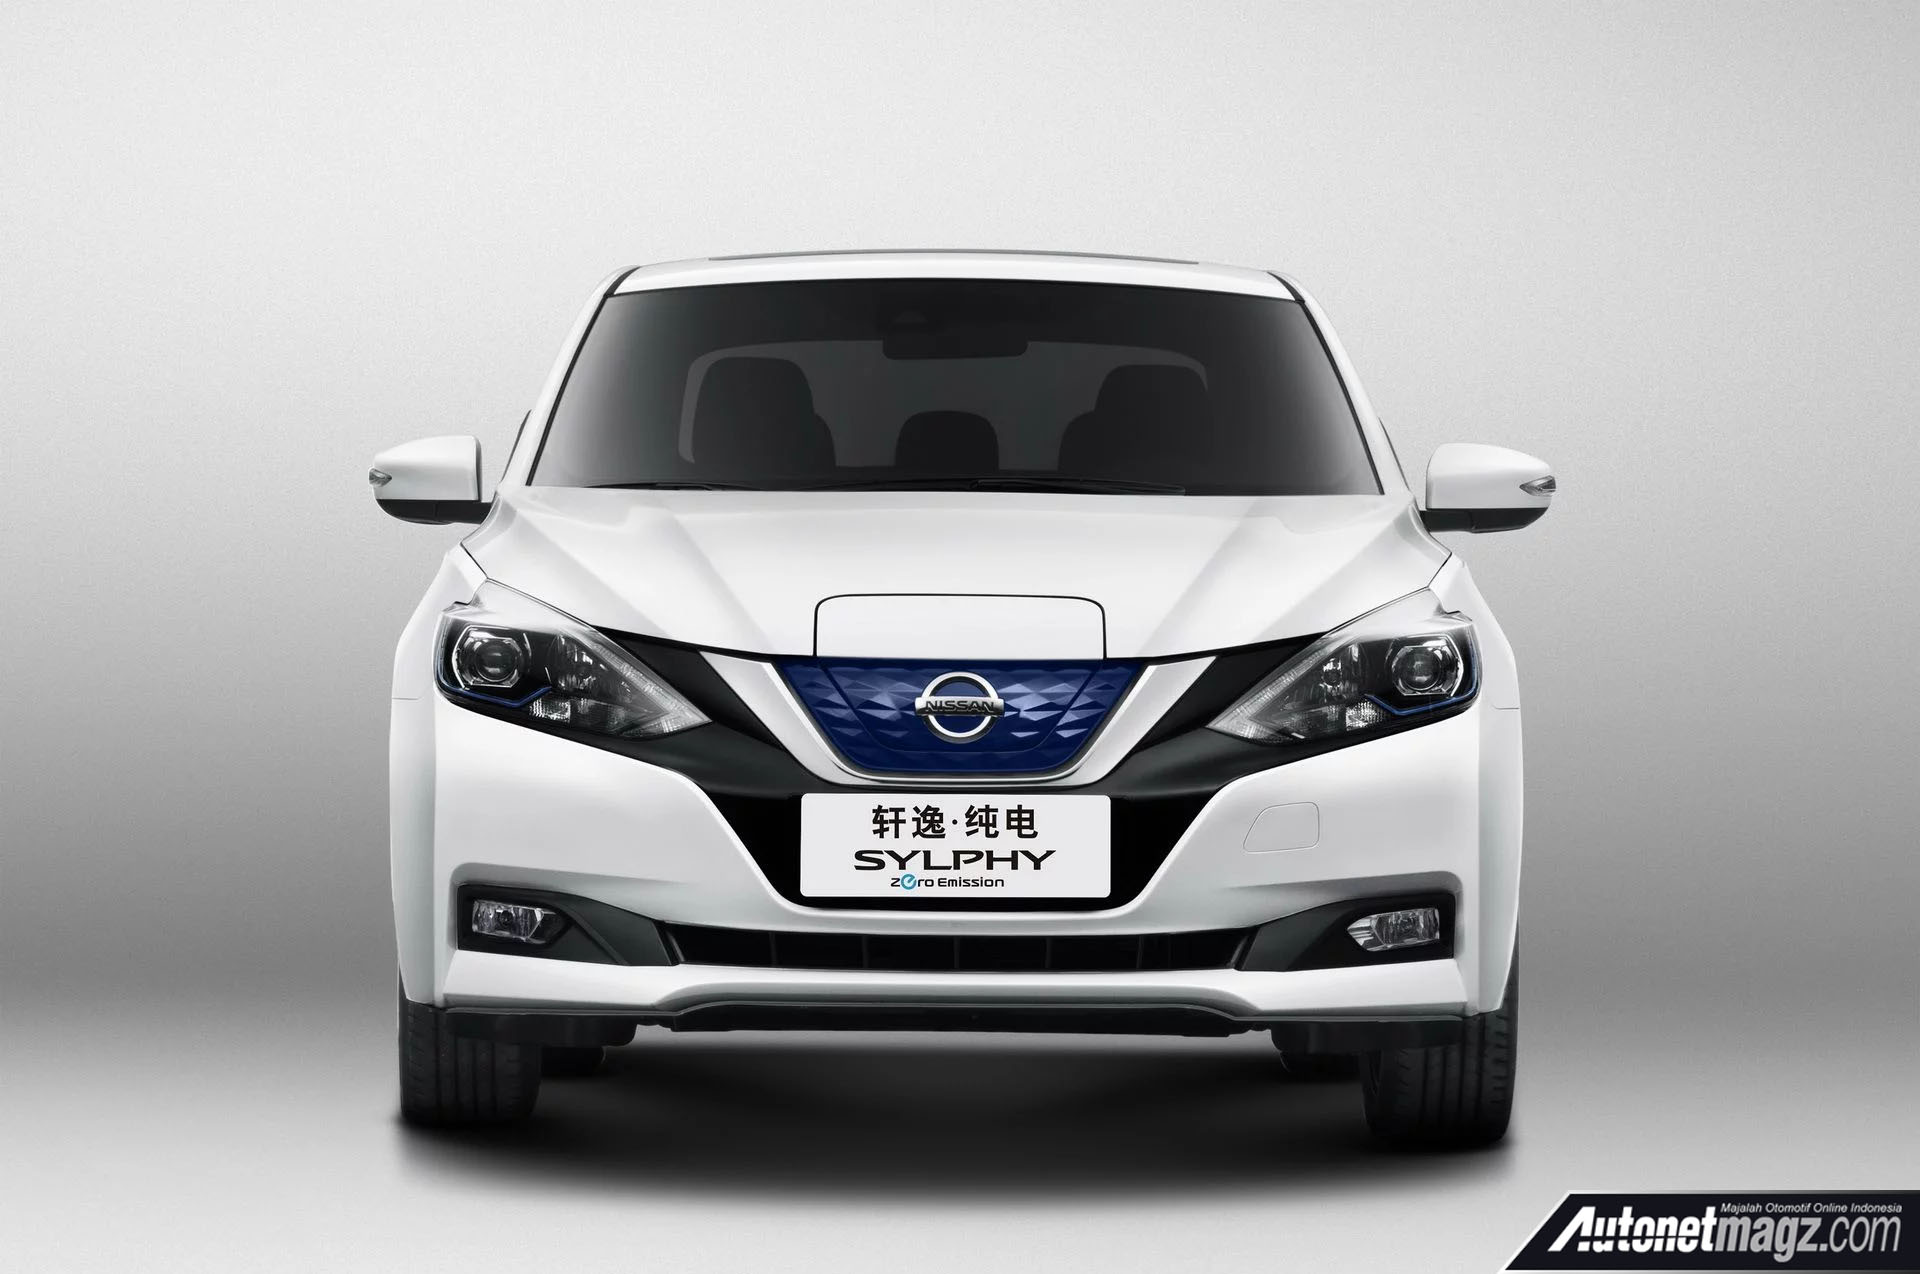 Berita, New Nissan Sylphy EV 2018: New Nissan Sylphy EV Resmi Diluncurkan di China